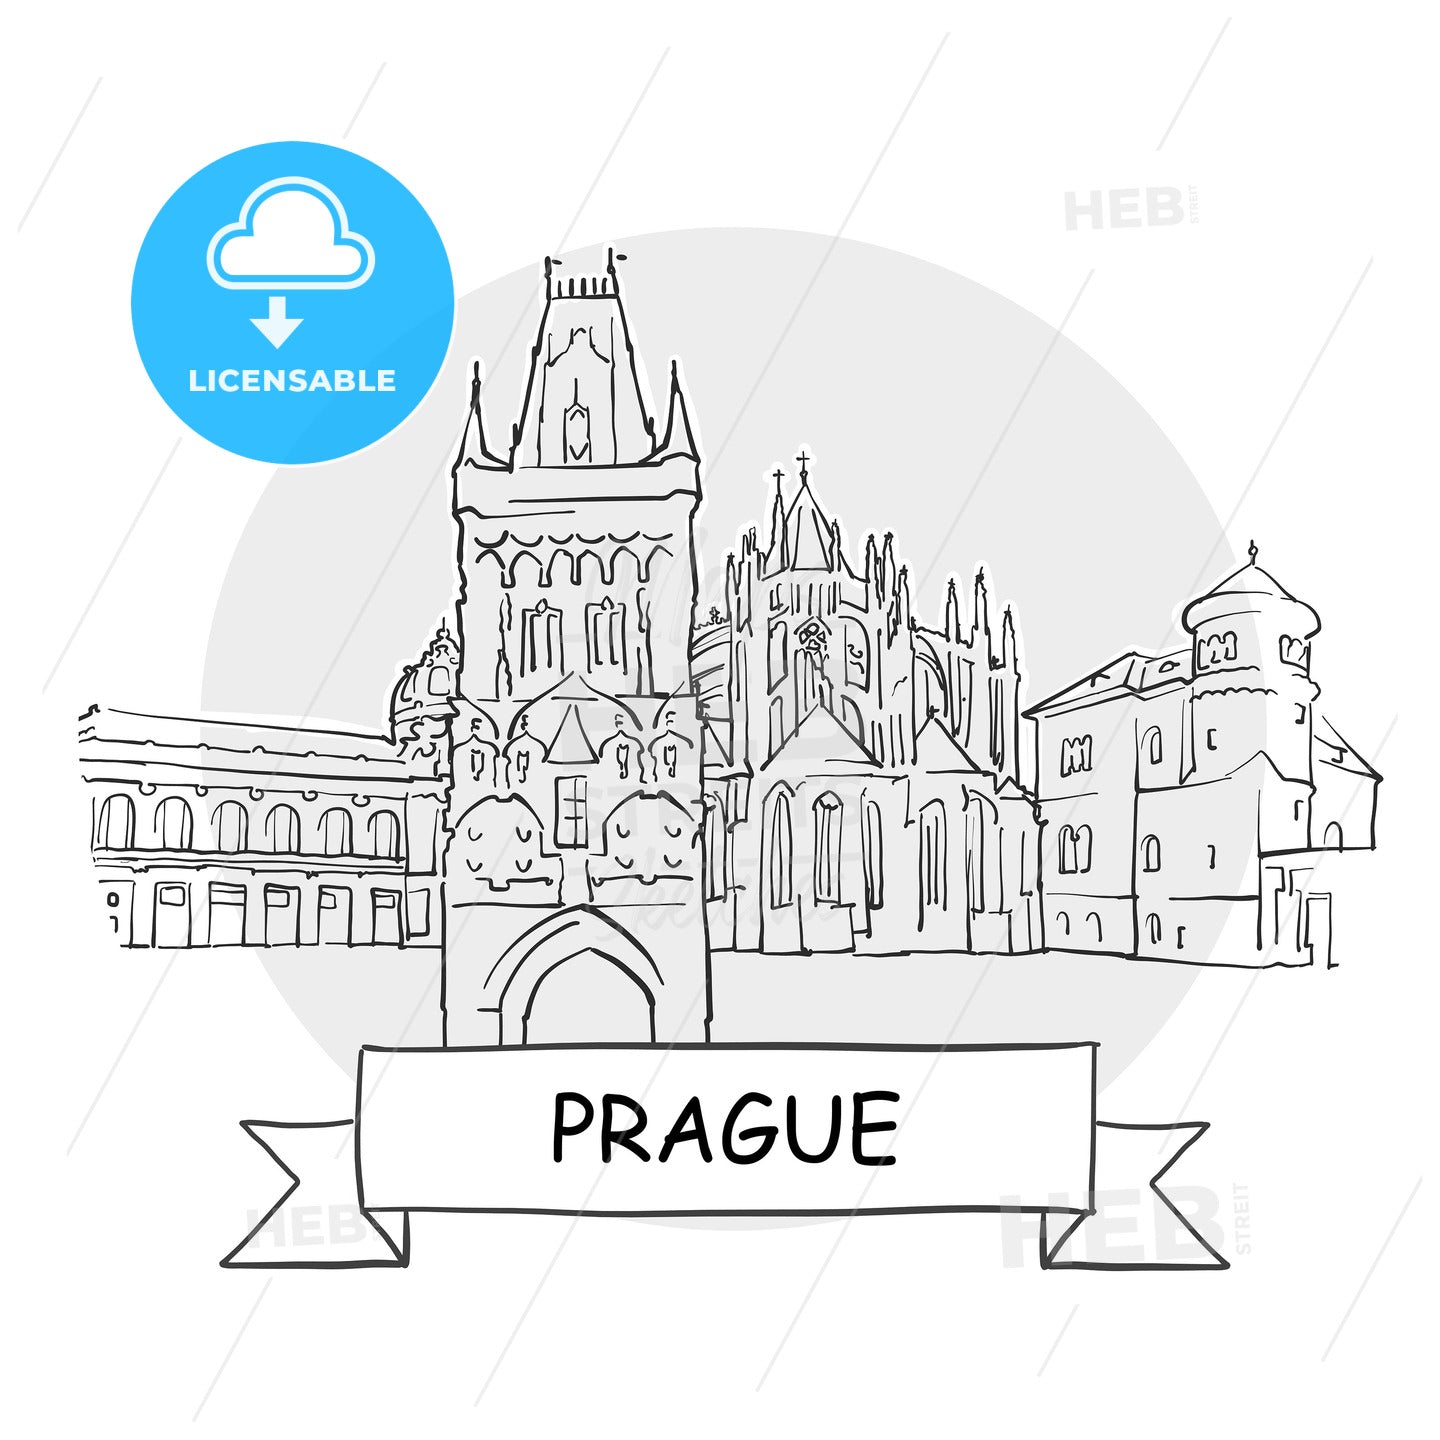 Prague hand-drawn urban vector sign – instant download